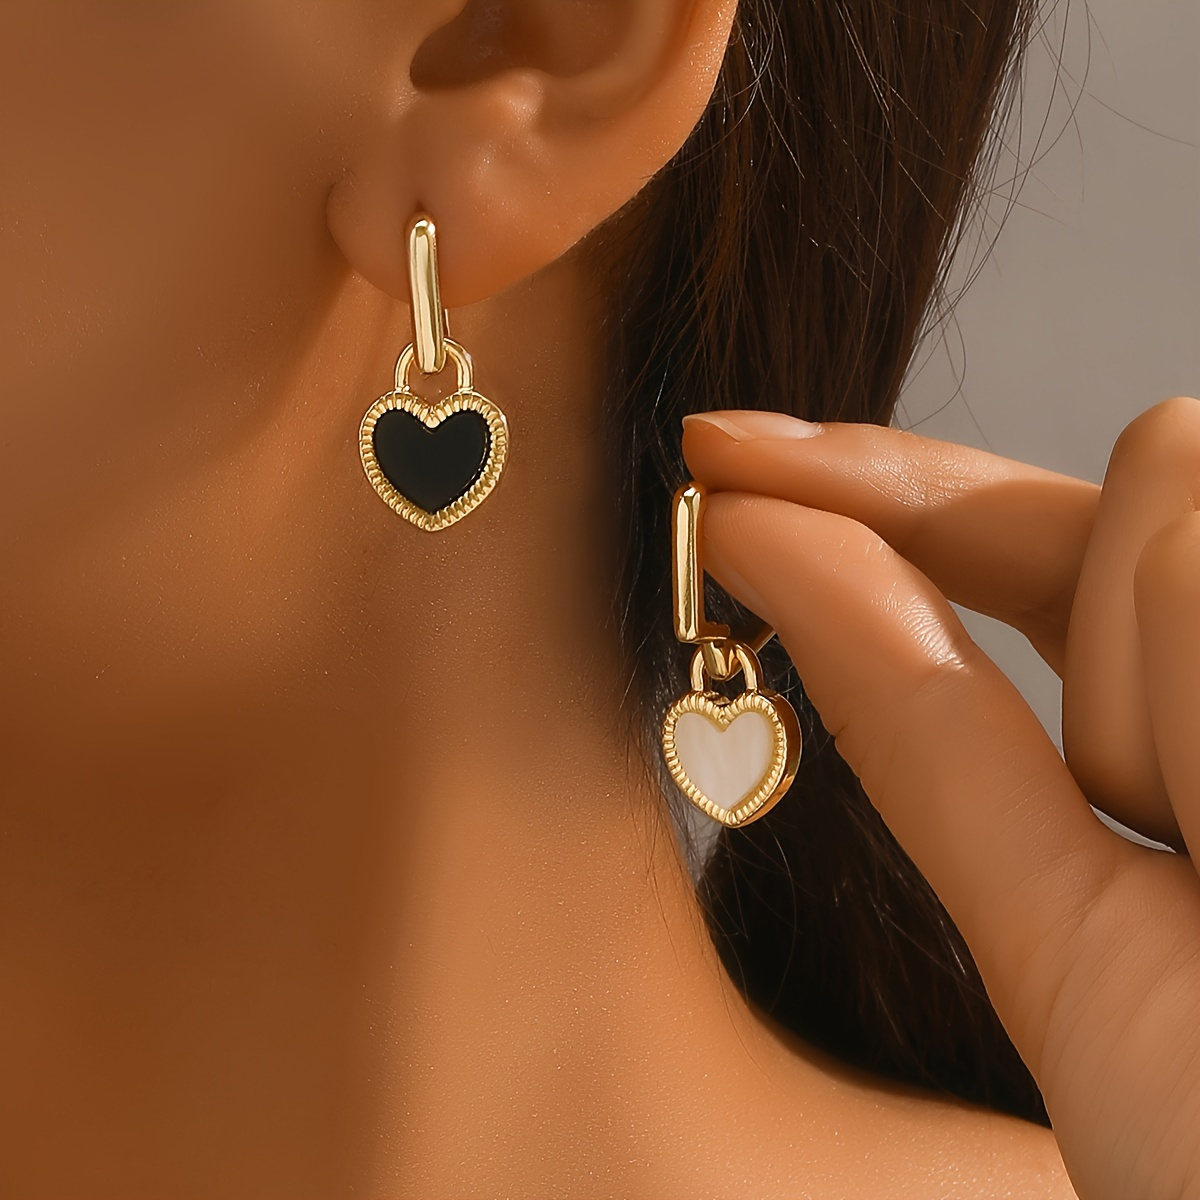 

1 Pair Of Black And White Two-sided Love Lock Earrings, French Style Retro Advanced Sense Boutique Heart Shape Pendant Dangle Earrings Female